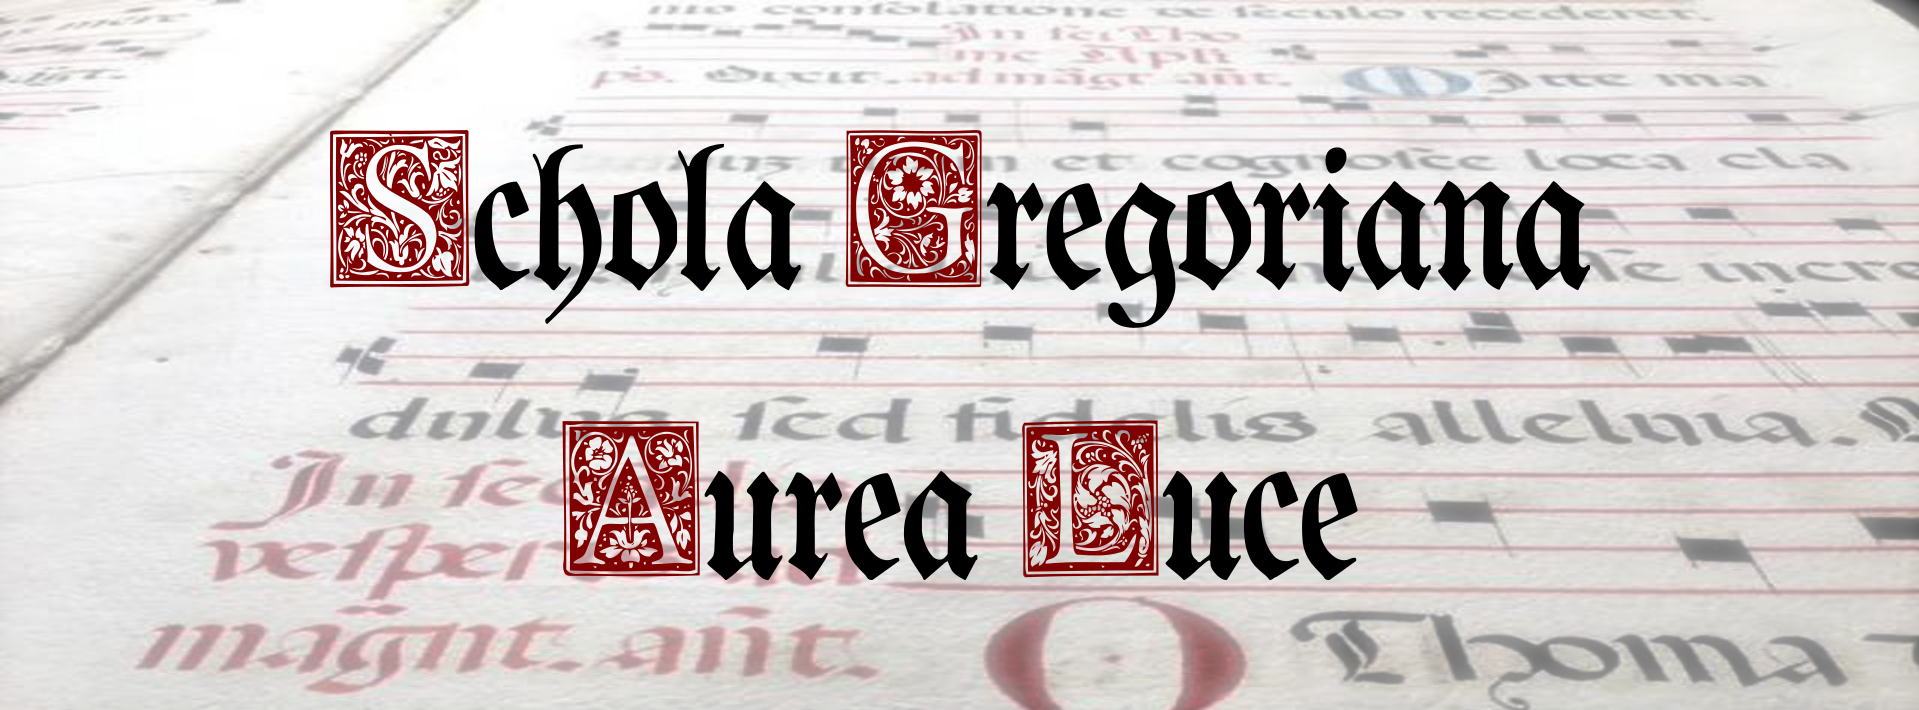 Schola gregoriana Aurea Luce